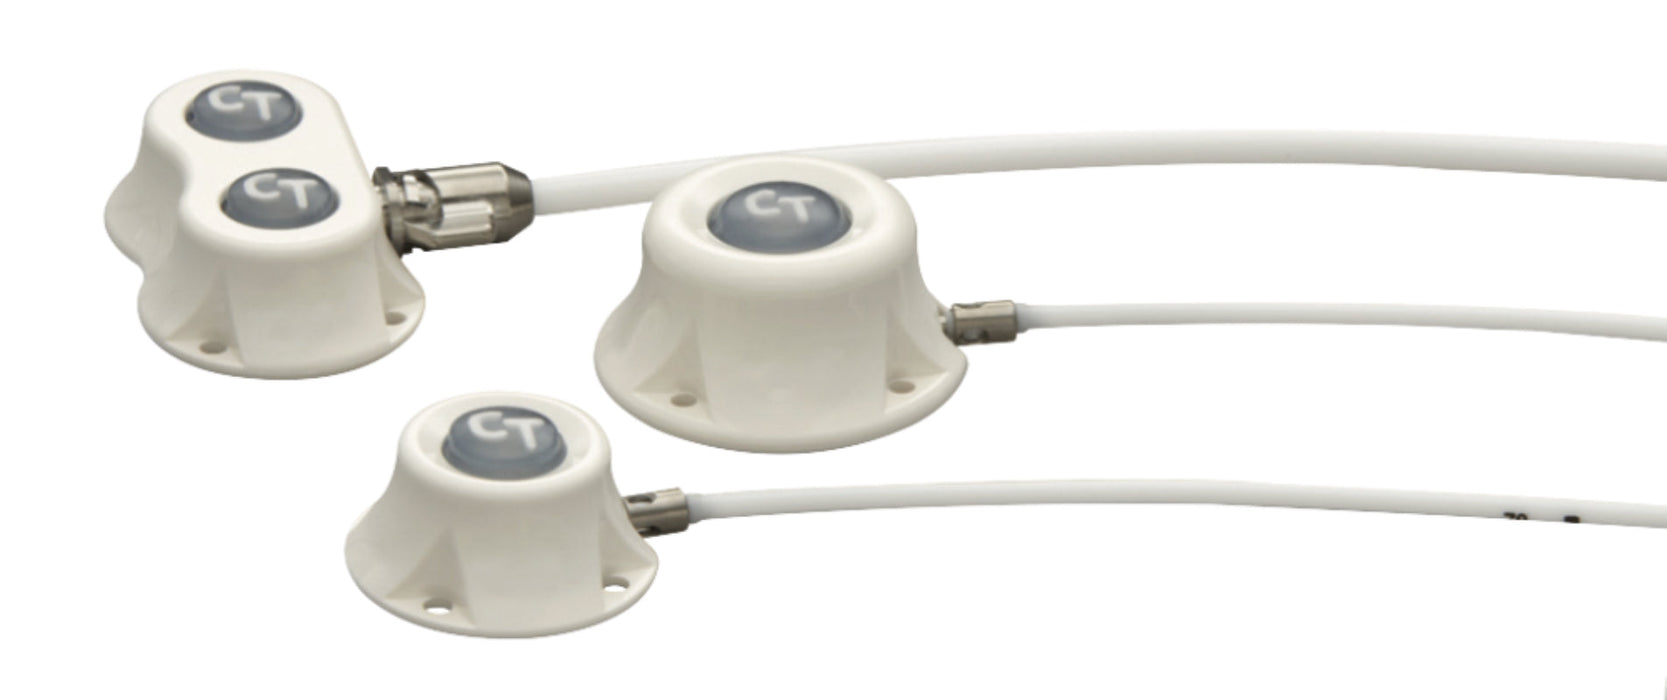 Port-A-Cath II Power P.A.C Implantable Vascular Access System Kit w/ Single Lumen Portal, 8.5Fr, 1.6mm ID x 2.6mm OD Catheter